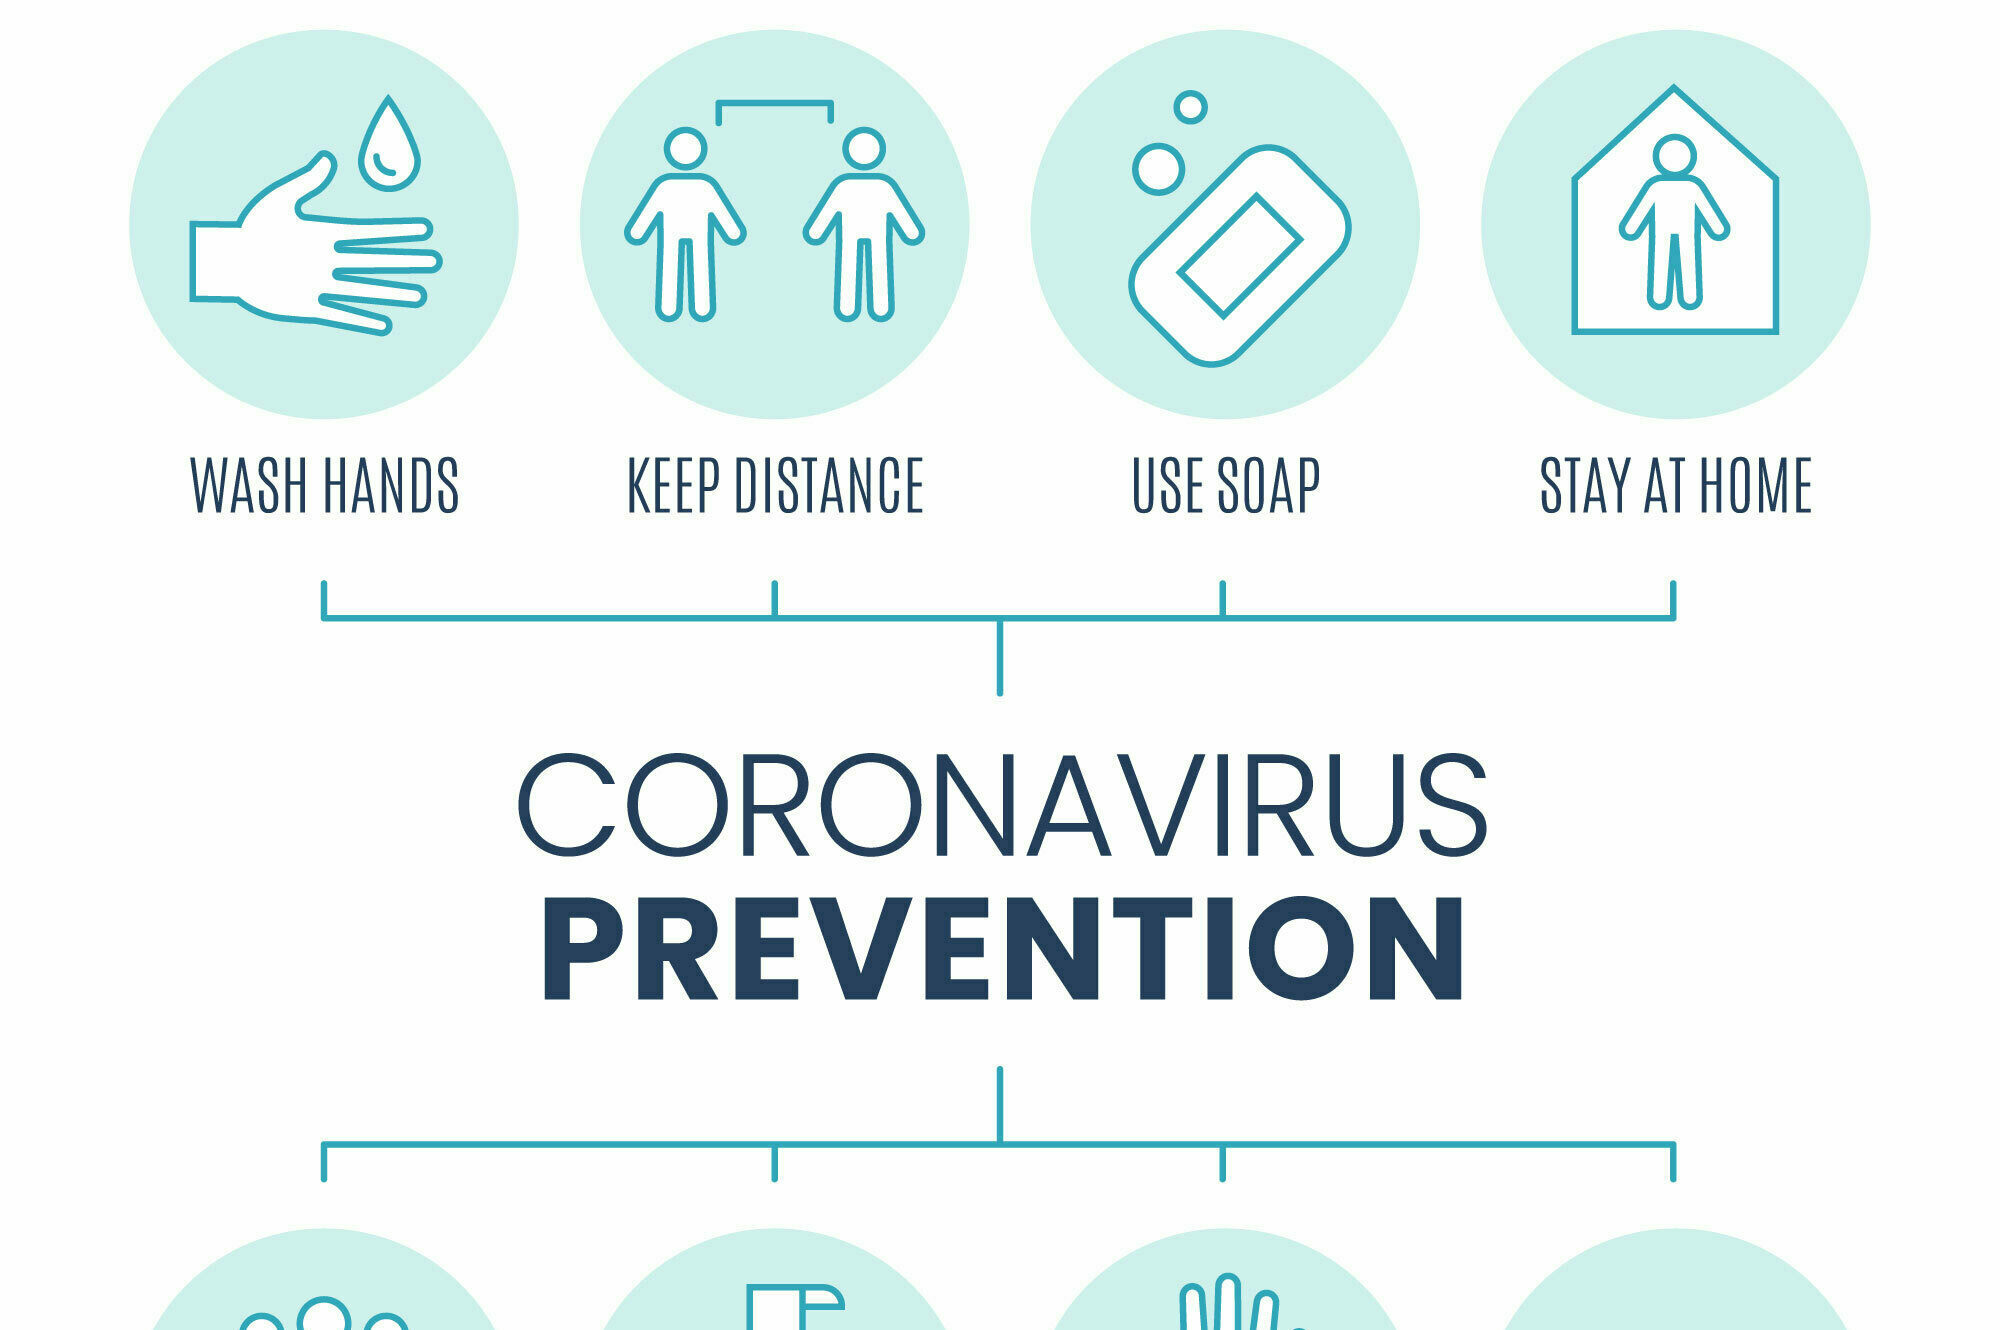 COVID-19 vaccine updates